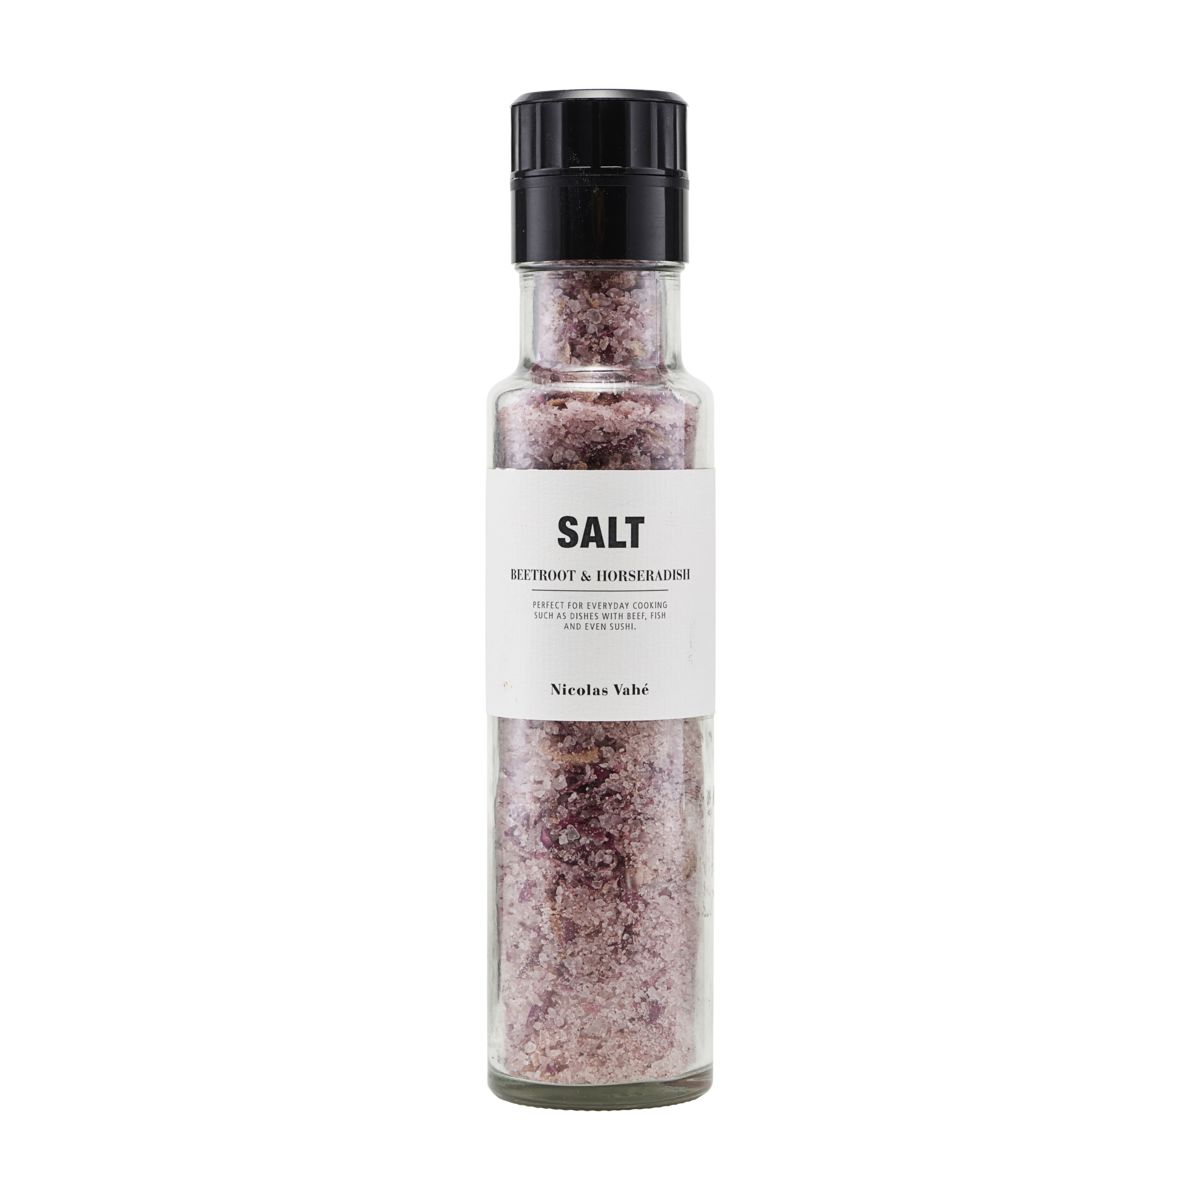 Salz "Salz, Beetroot & Horseradish"